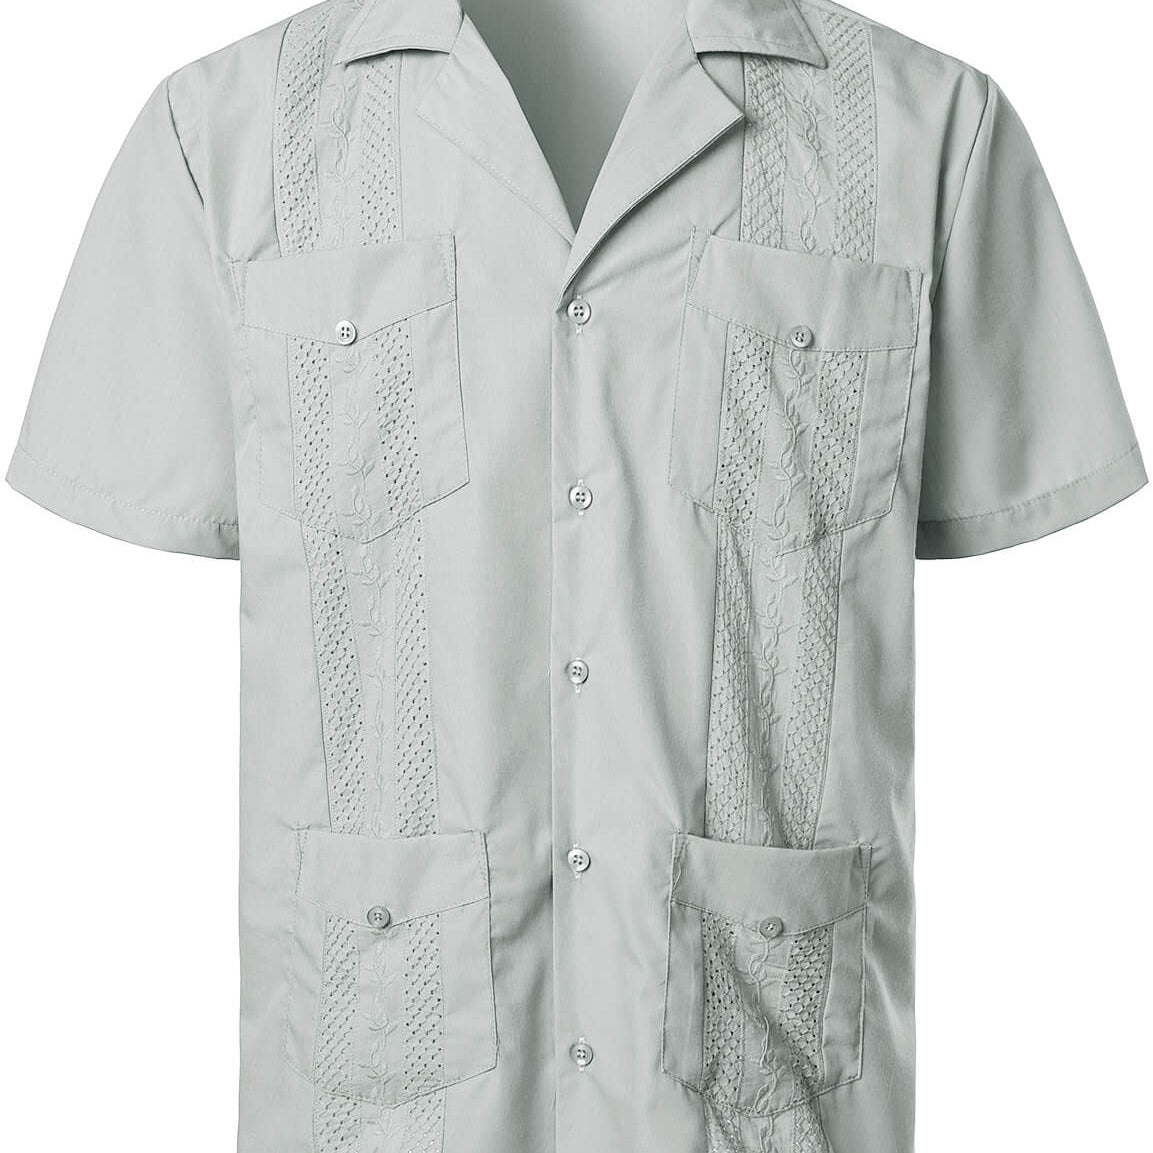 Broderie pour hommes Cuban Guayabera Summer Cool Manches courtes Button Up Shirt